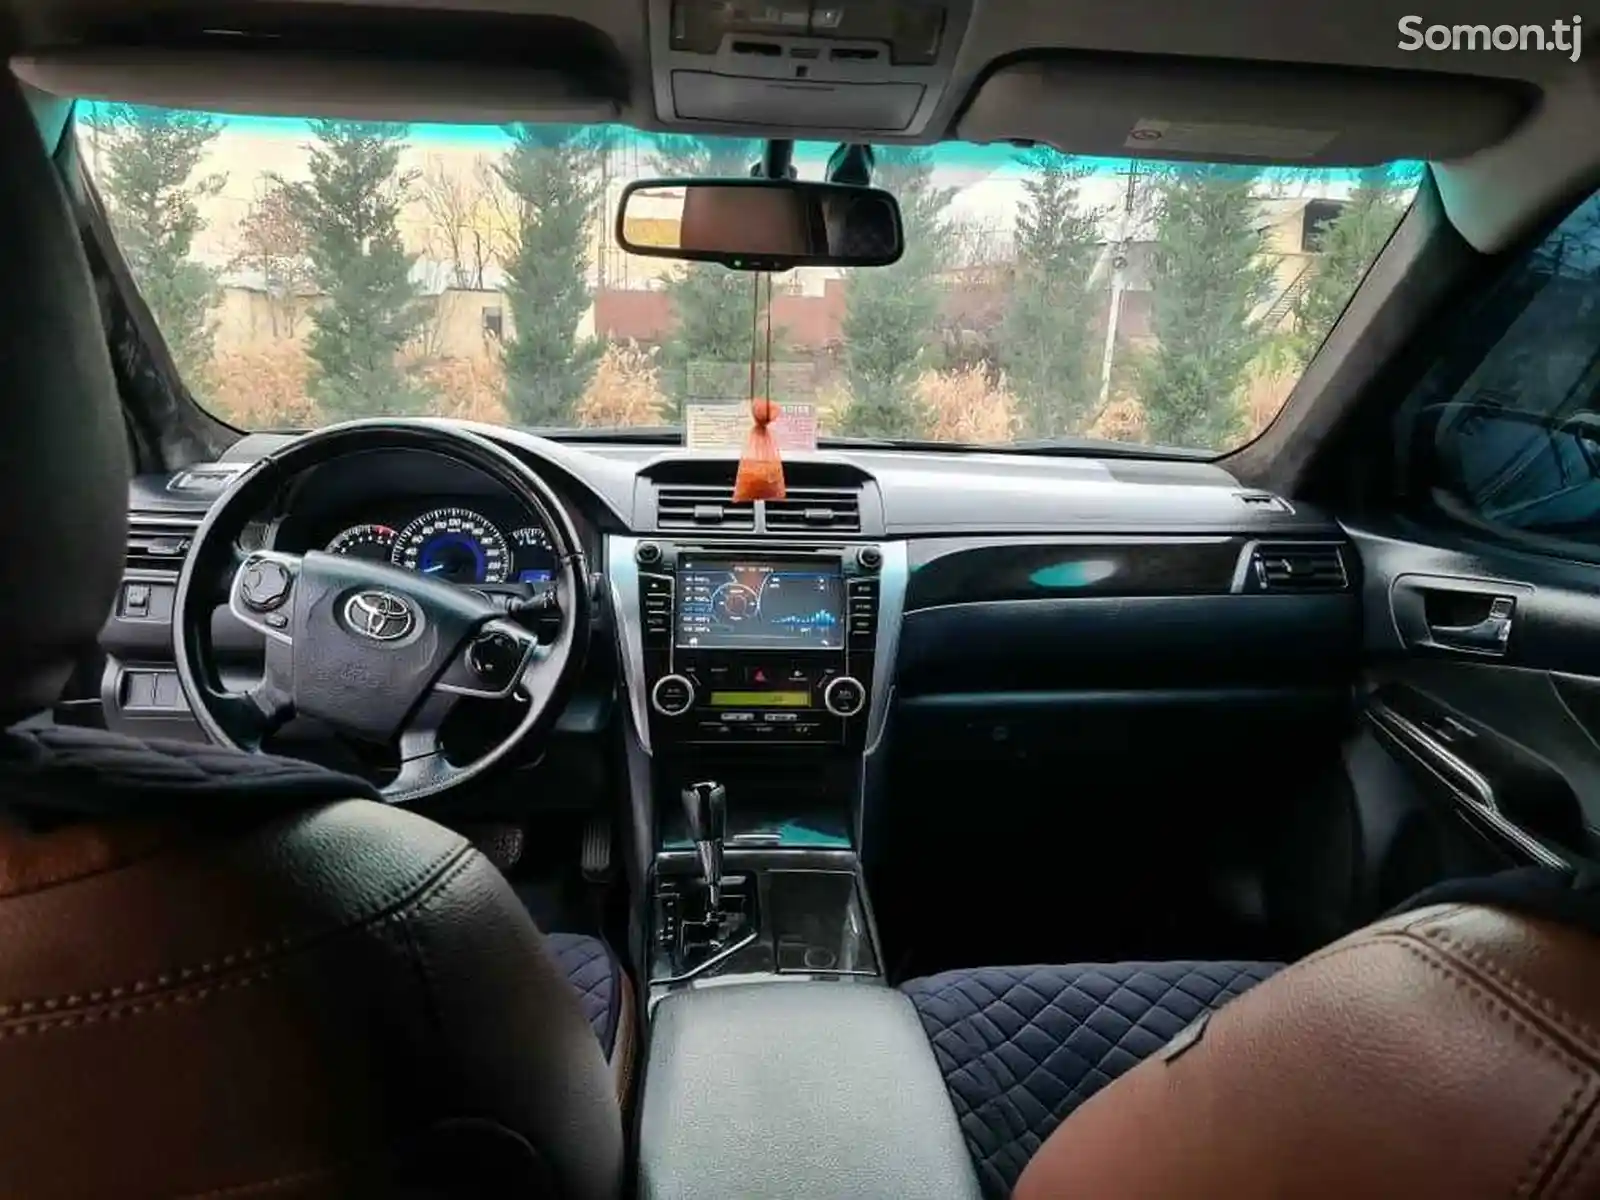 Toyota Camry, 2012-5